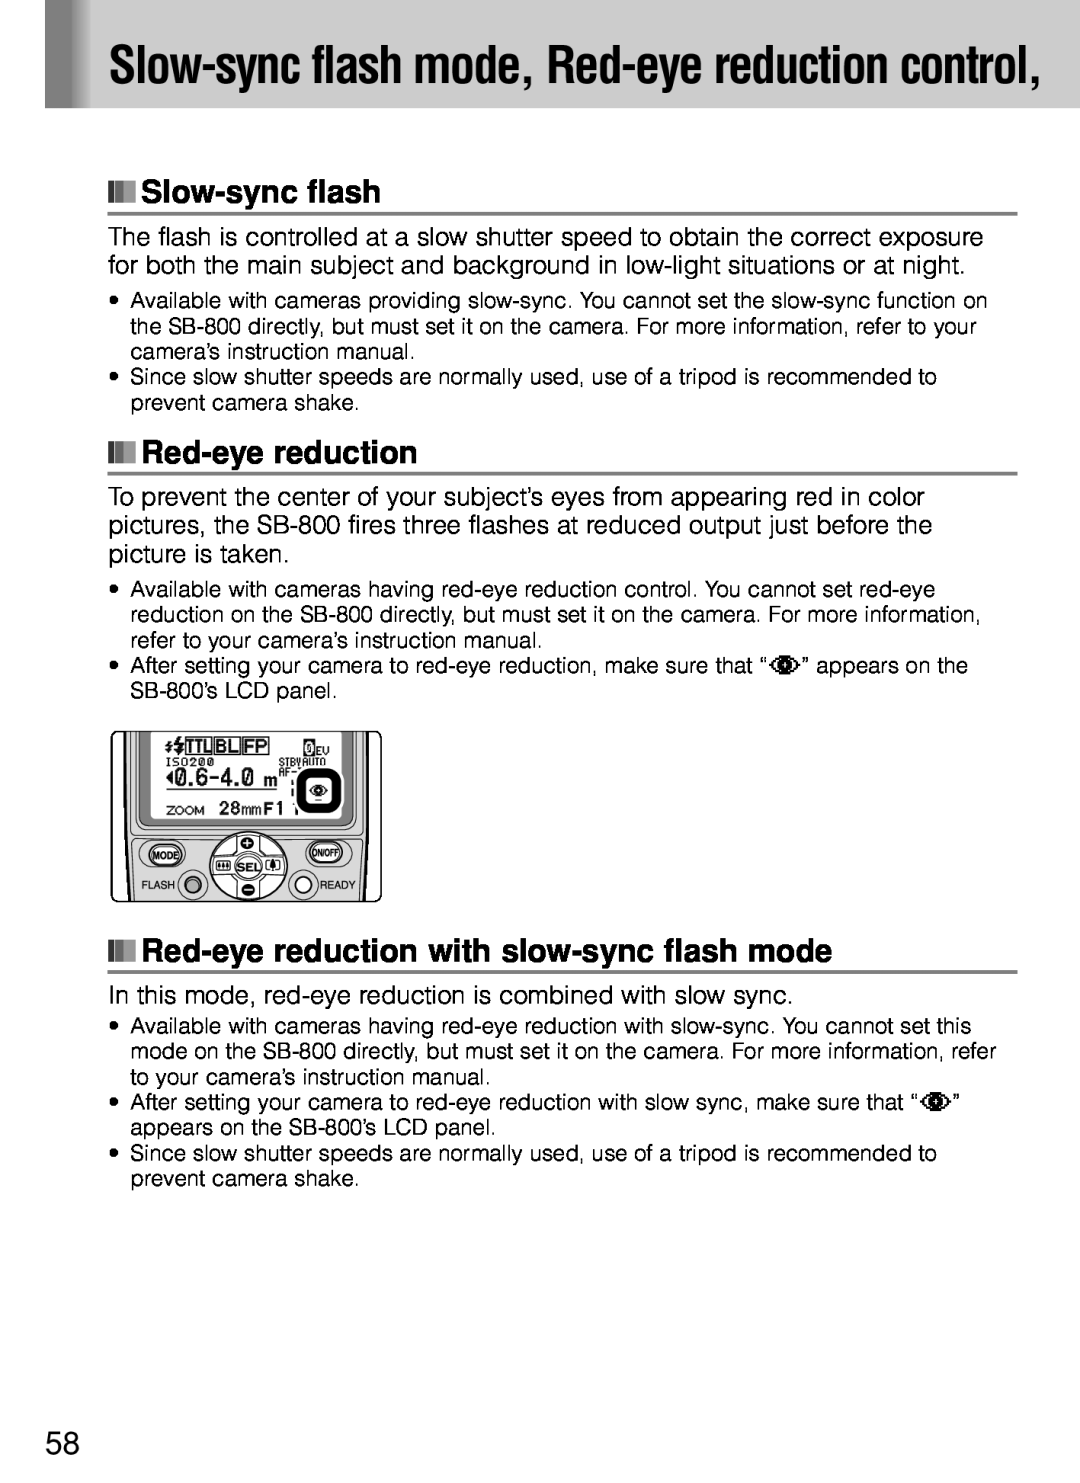 Nikon SB-800 Slow-sync flash mode, Red-eye reduction control, Red-eye reduction with slow-sync flash mode 